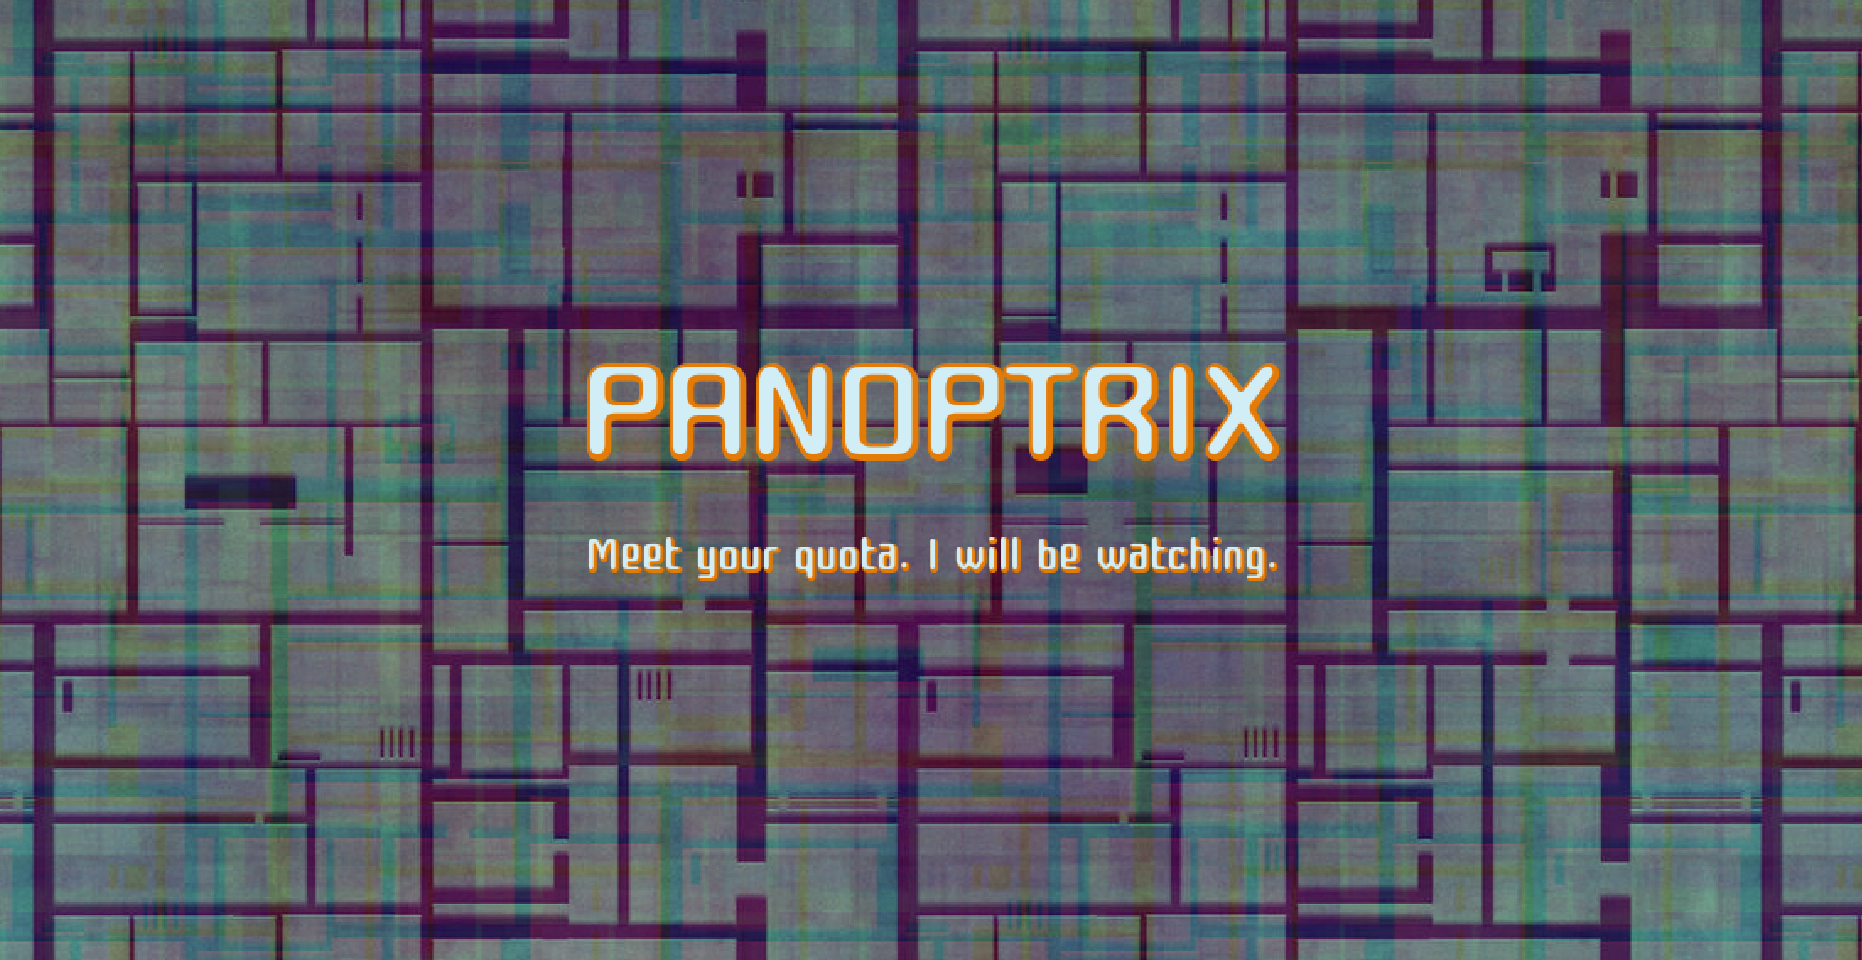 Panoptrix